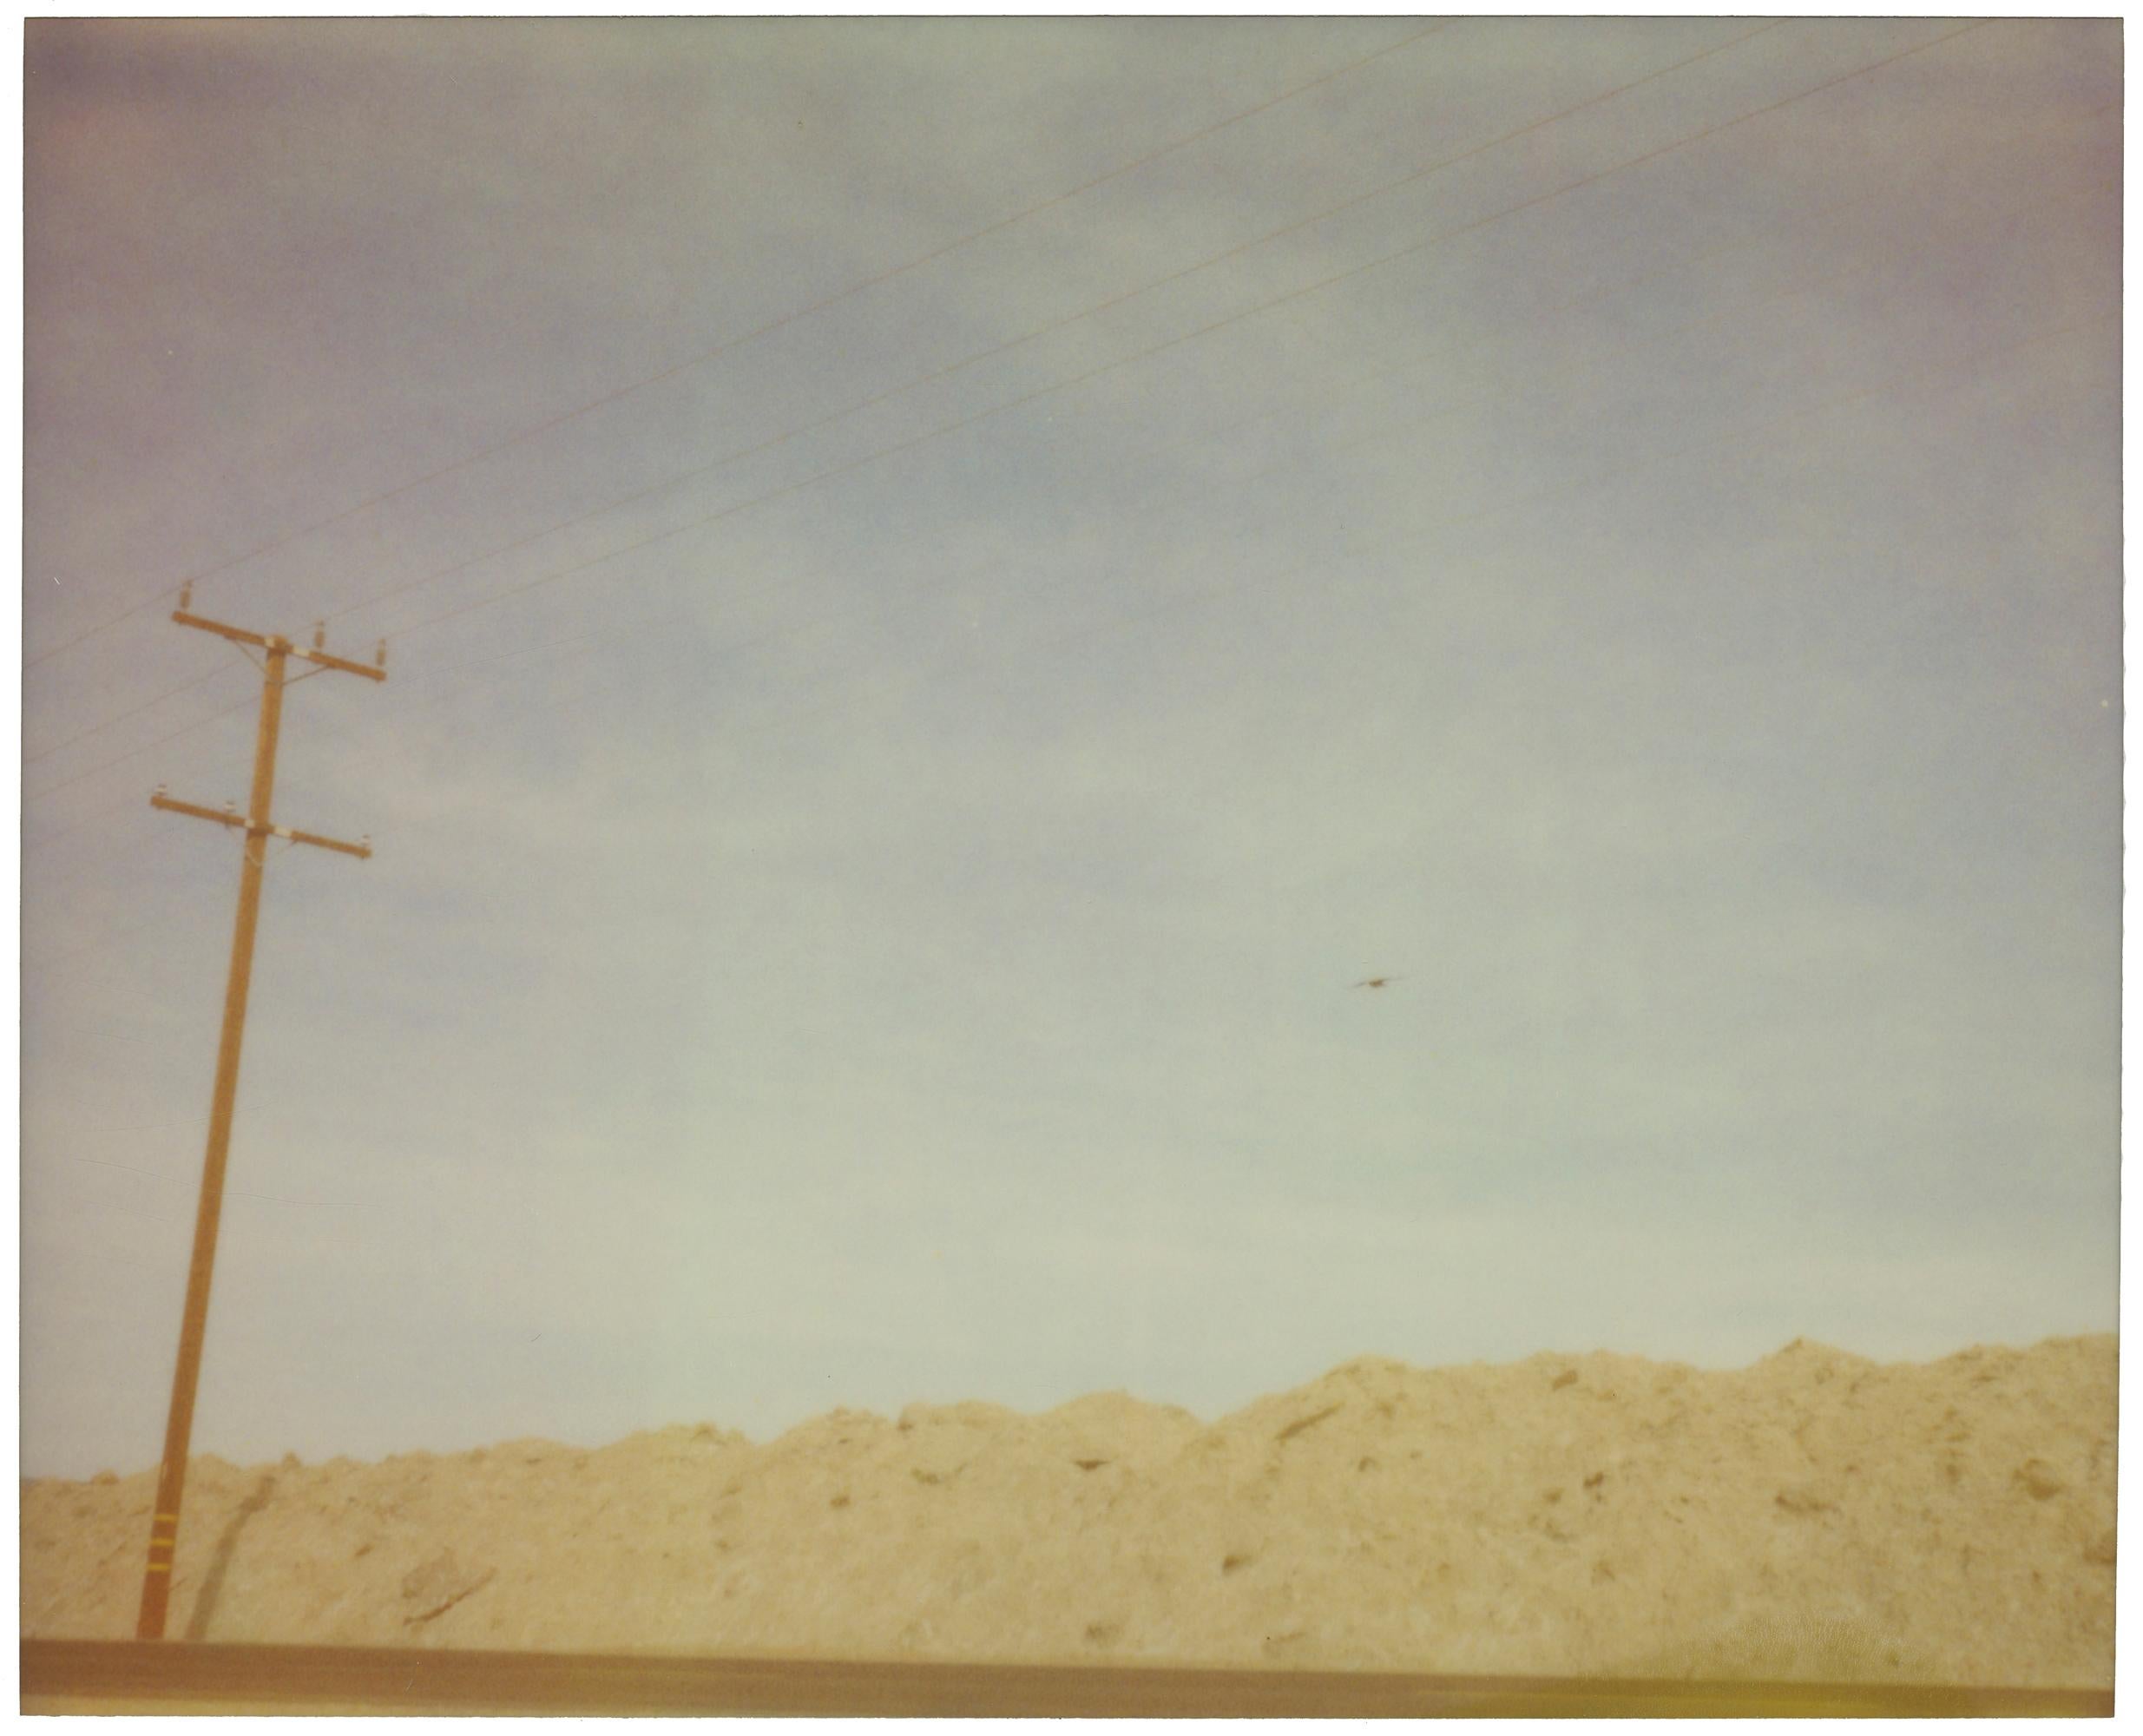 Train tracks (California Badlands) - Contemporary, Polaroid, Landscape